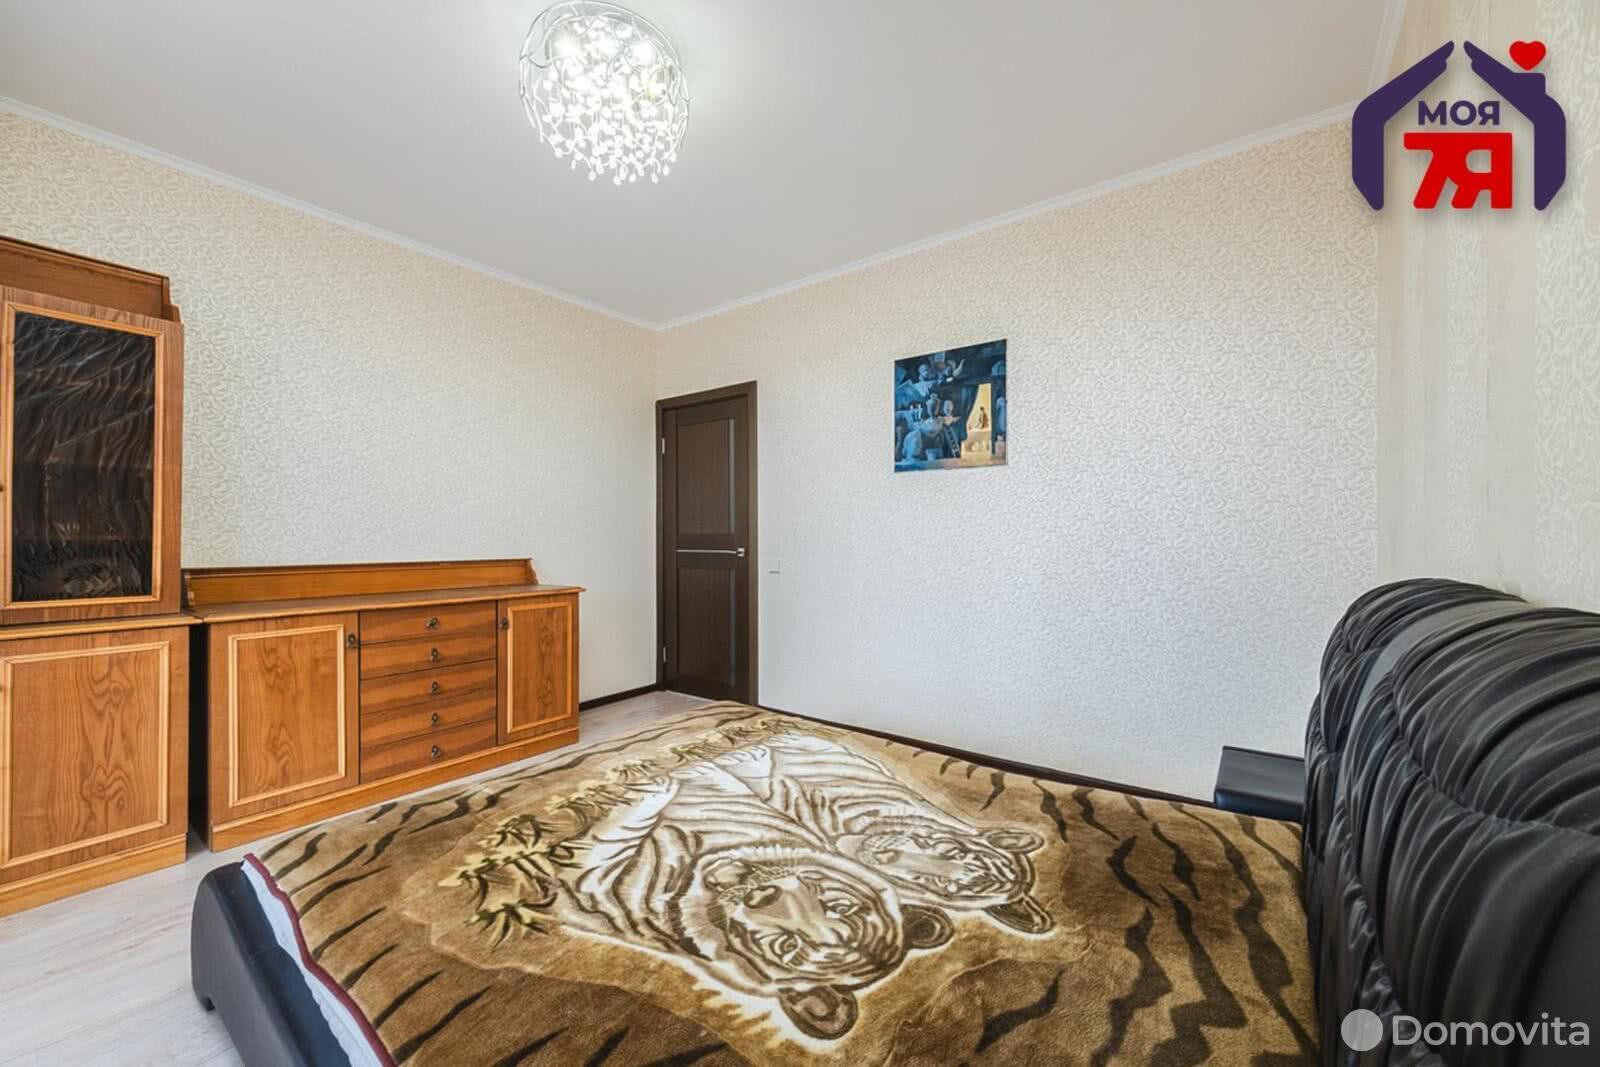 квартира, Минск, ул. Семенова, д. 36, стоимость продажи 352 581 р.